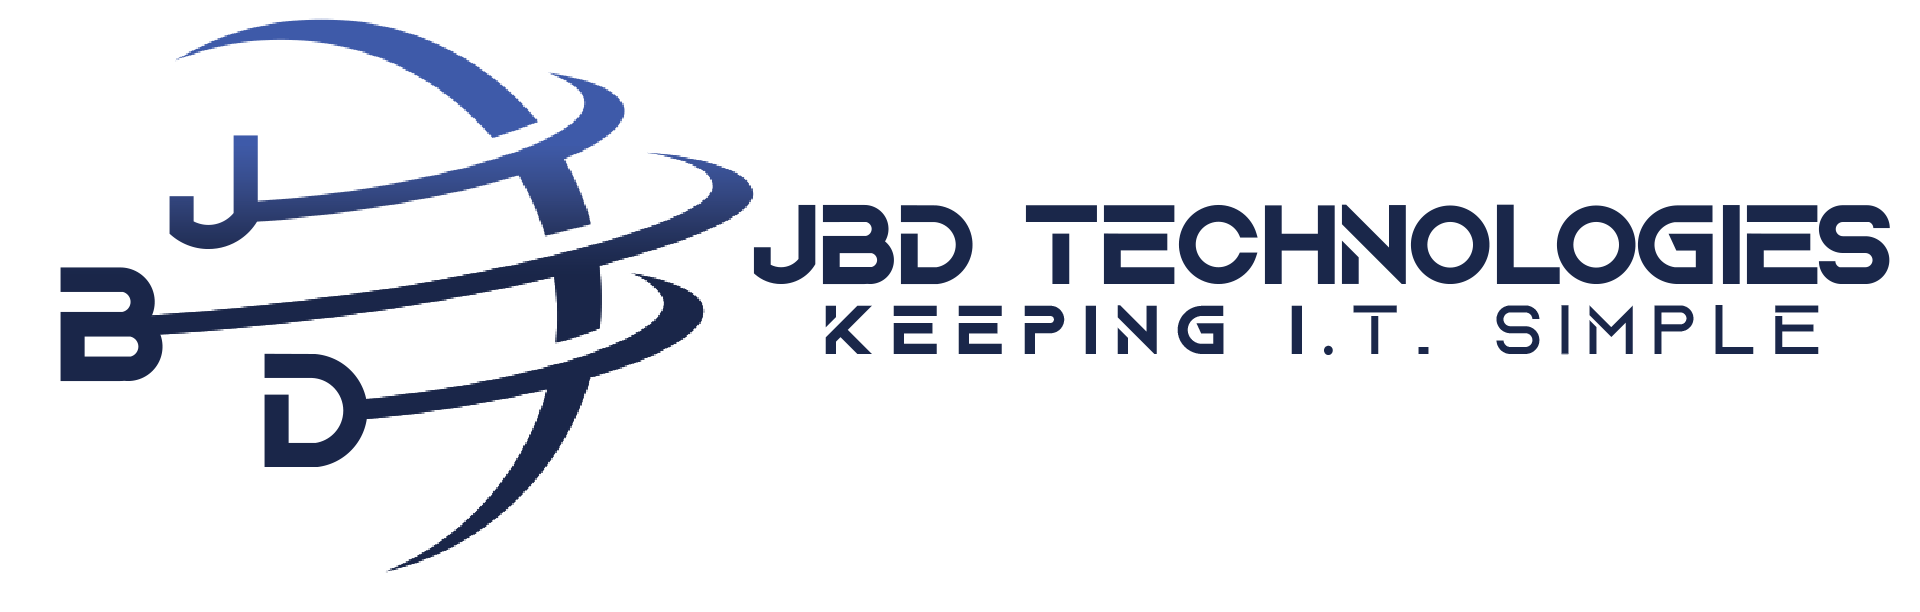 JBD Technologies